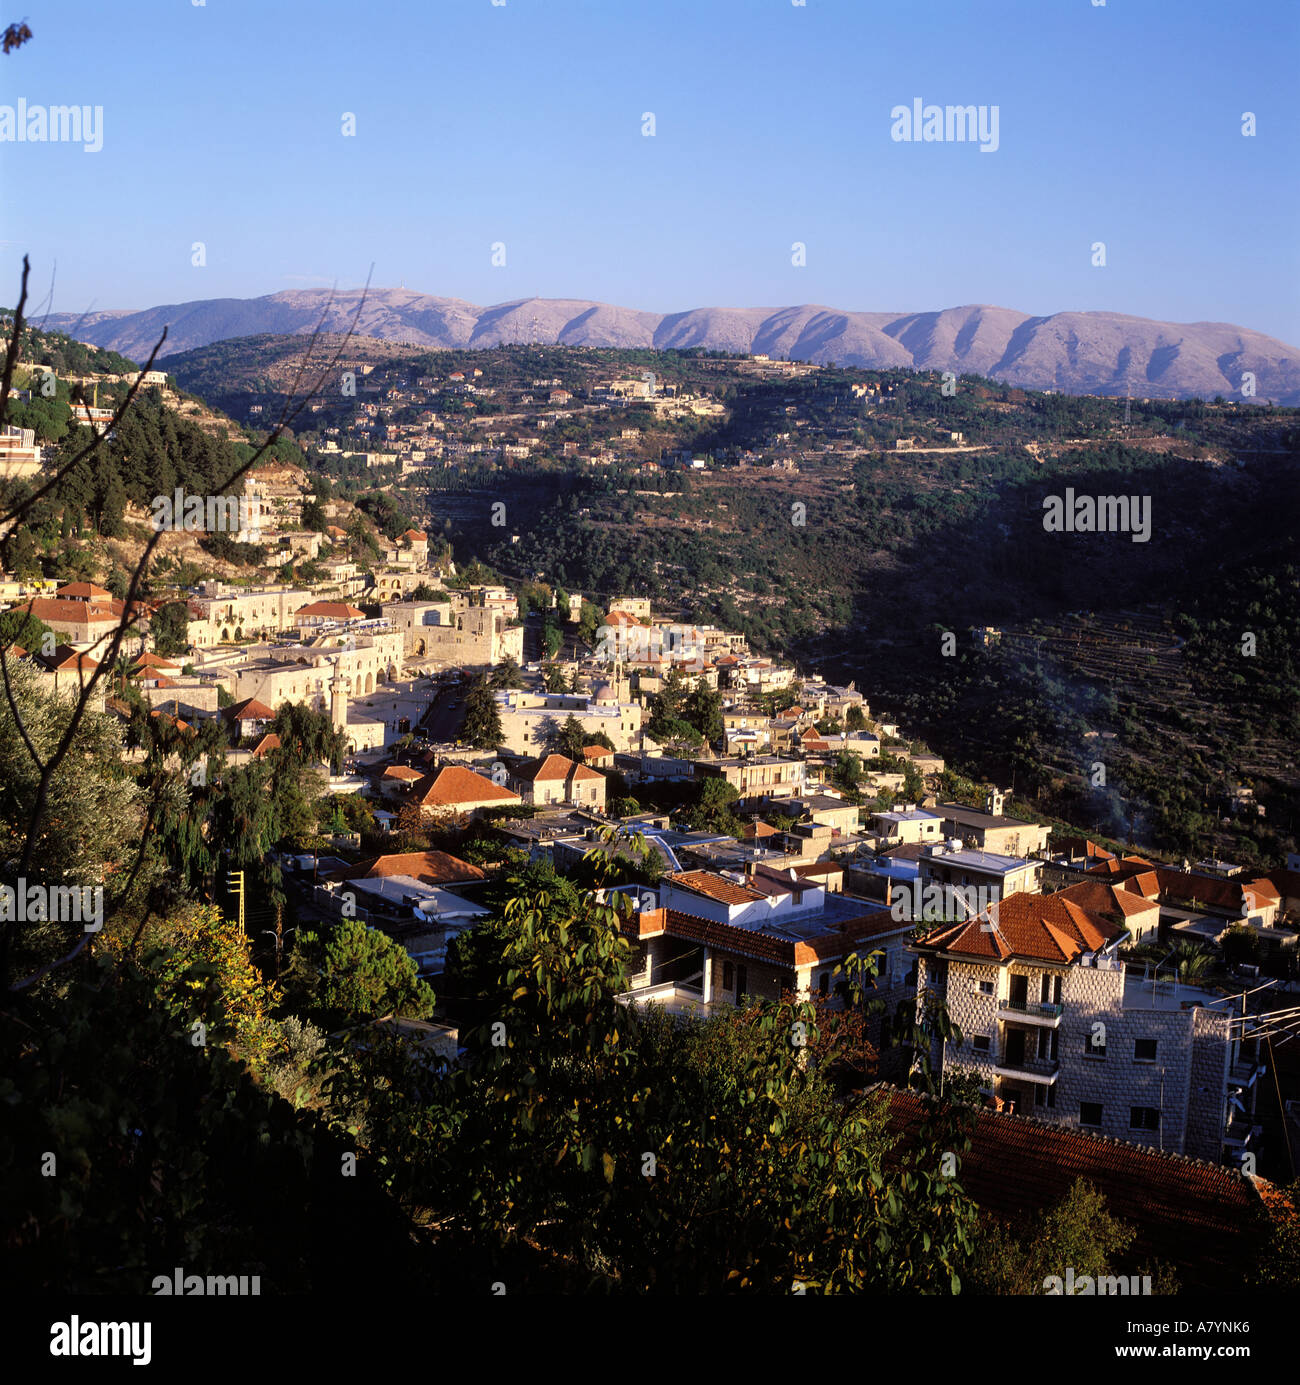 Lebanon, Chouf region, Deir el Qamar village Stock Photo